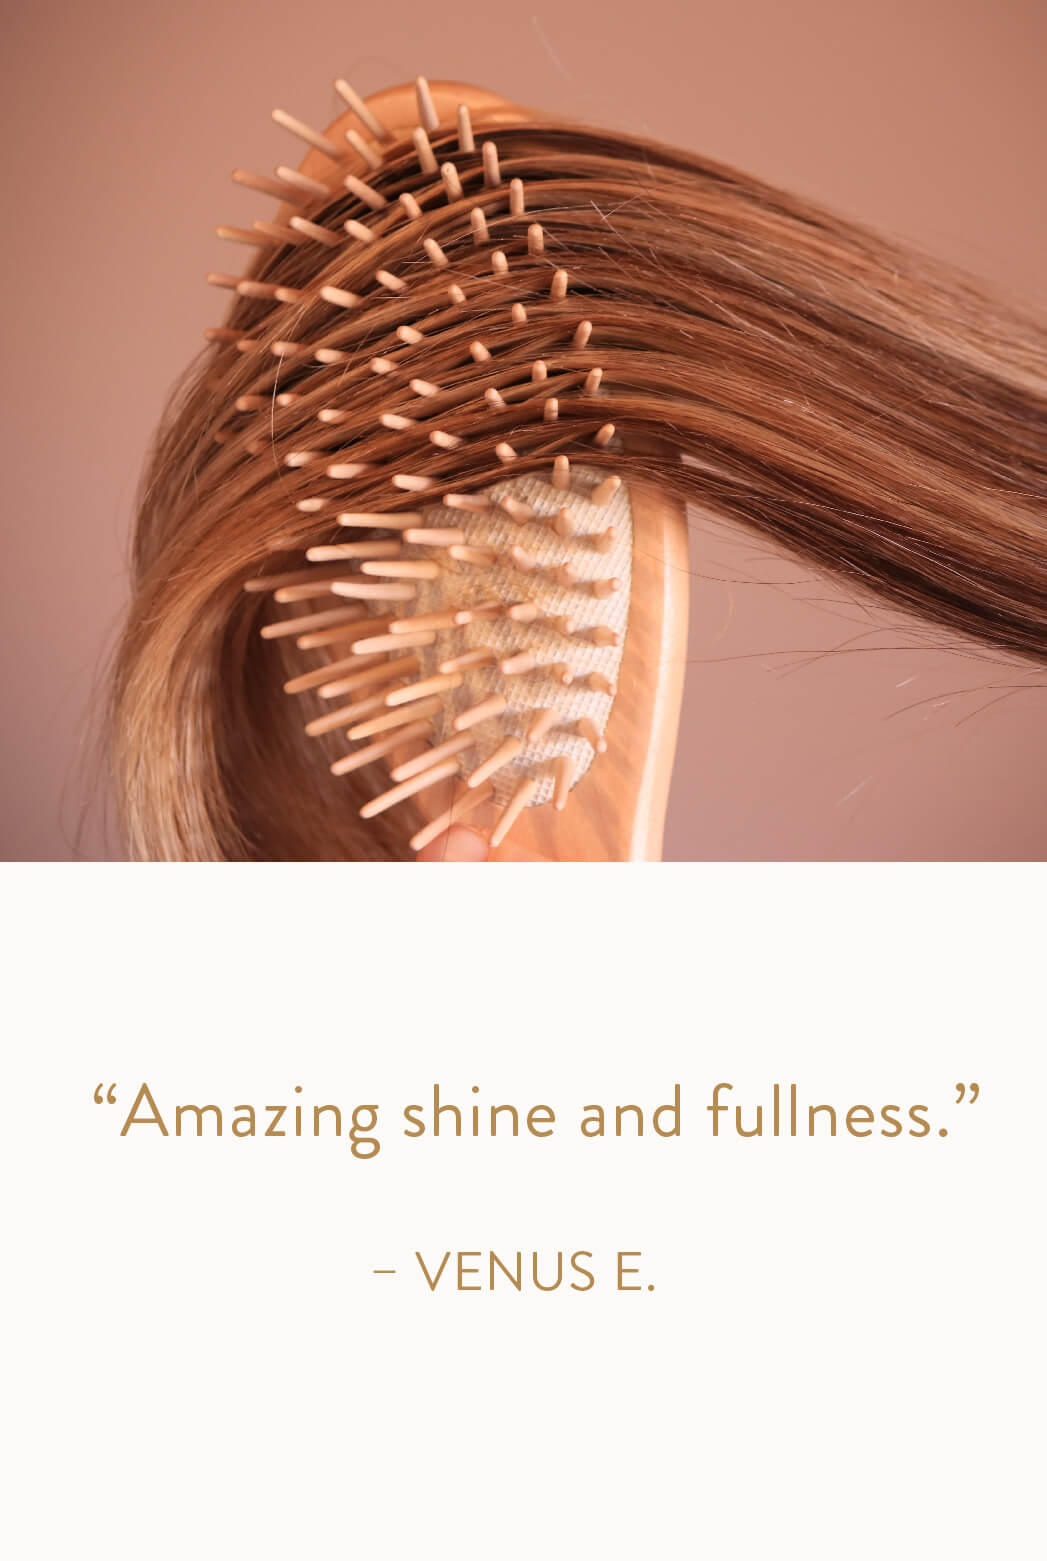 "Amazing shine and fullness." - Venus E.